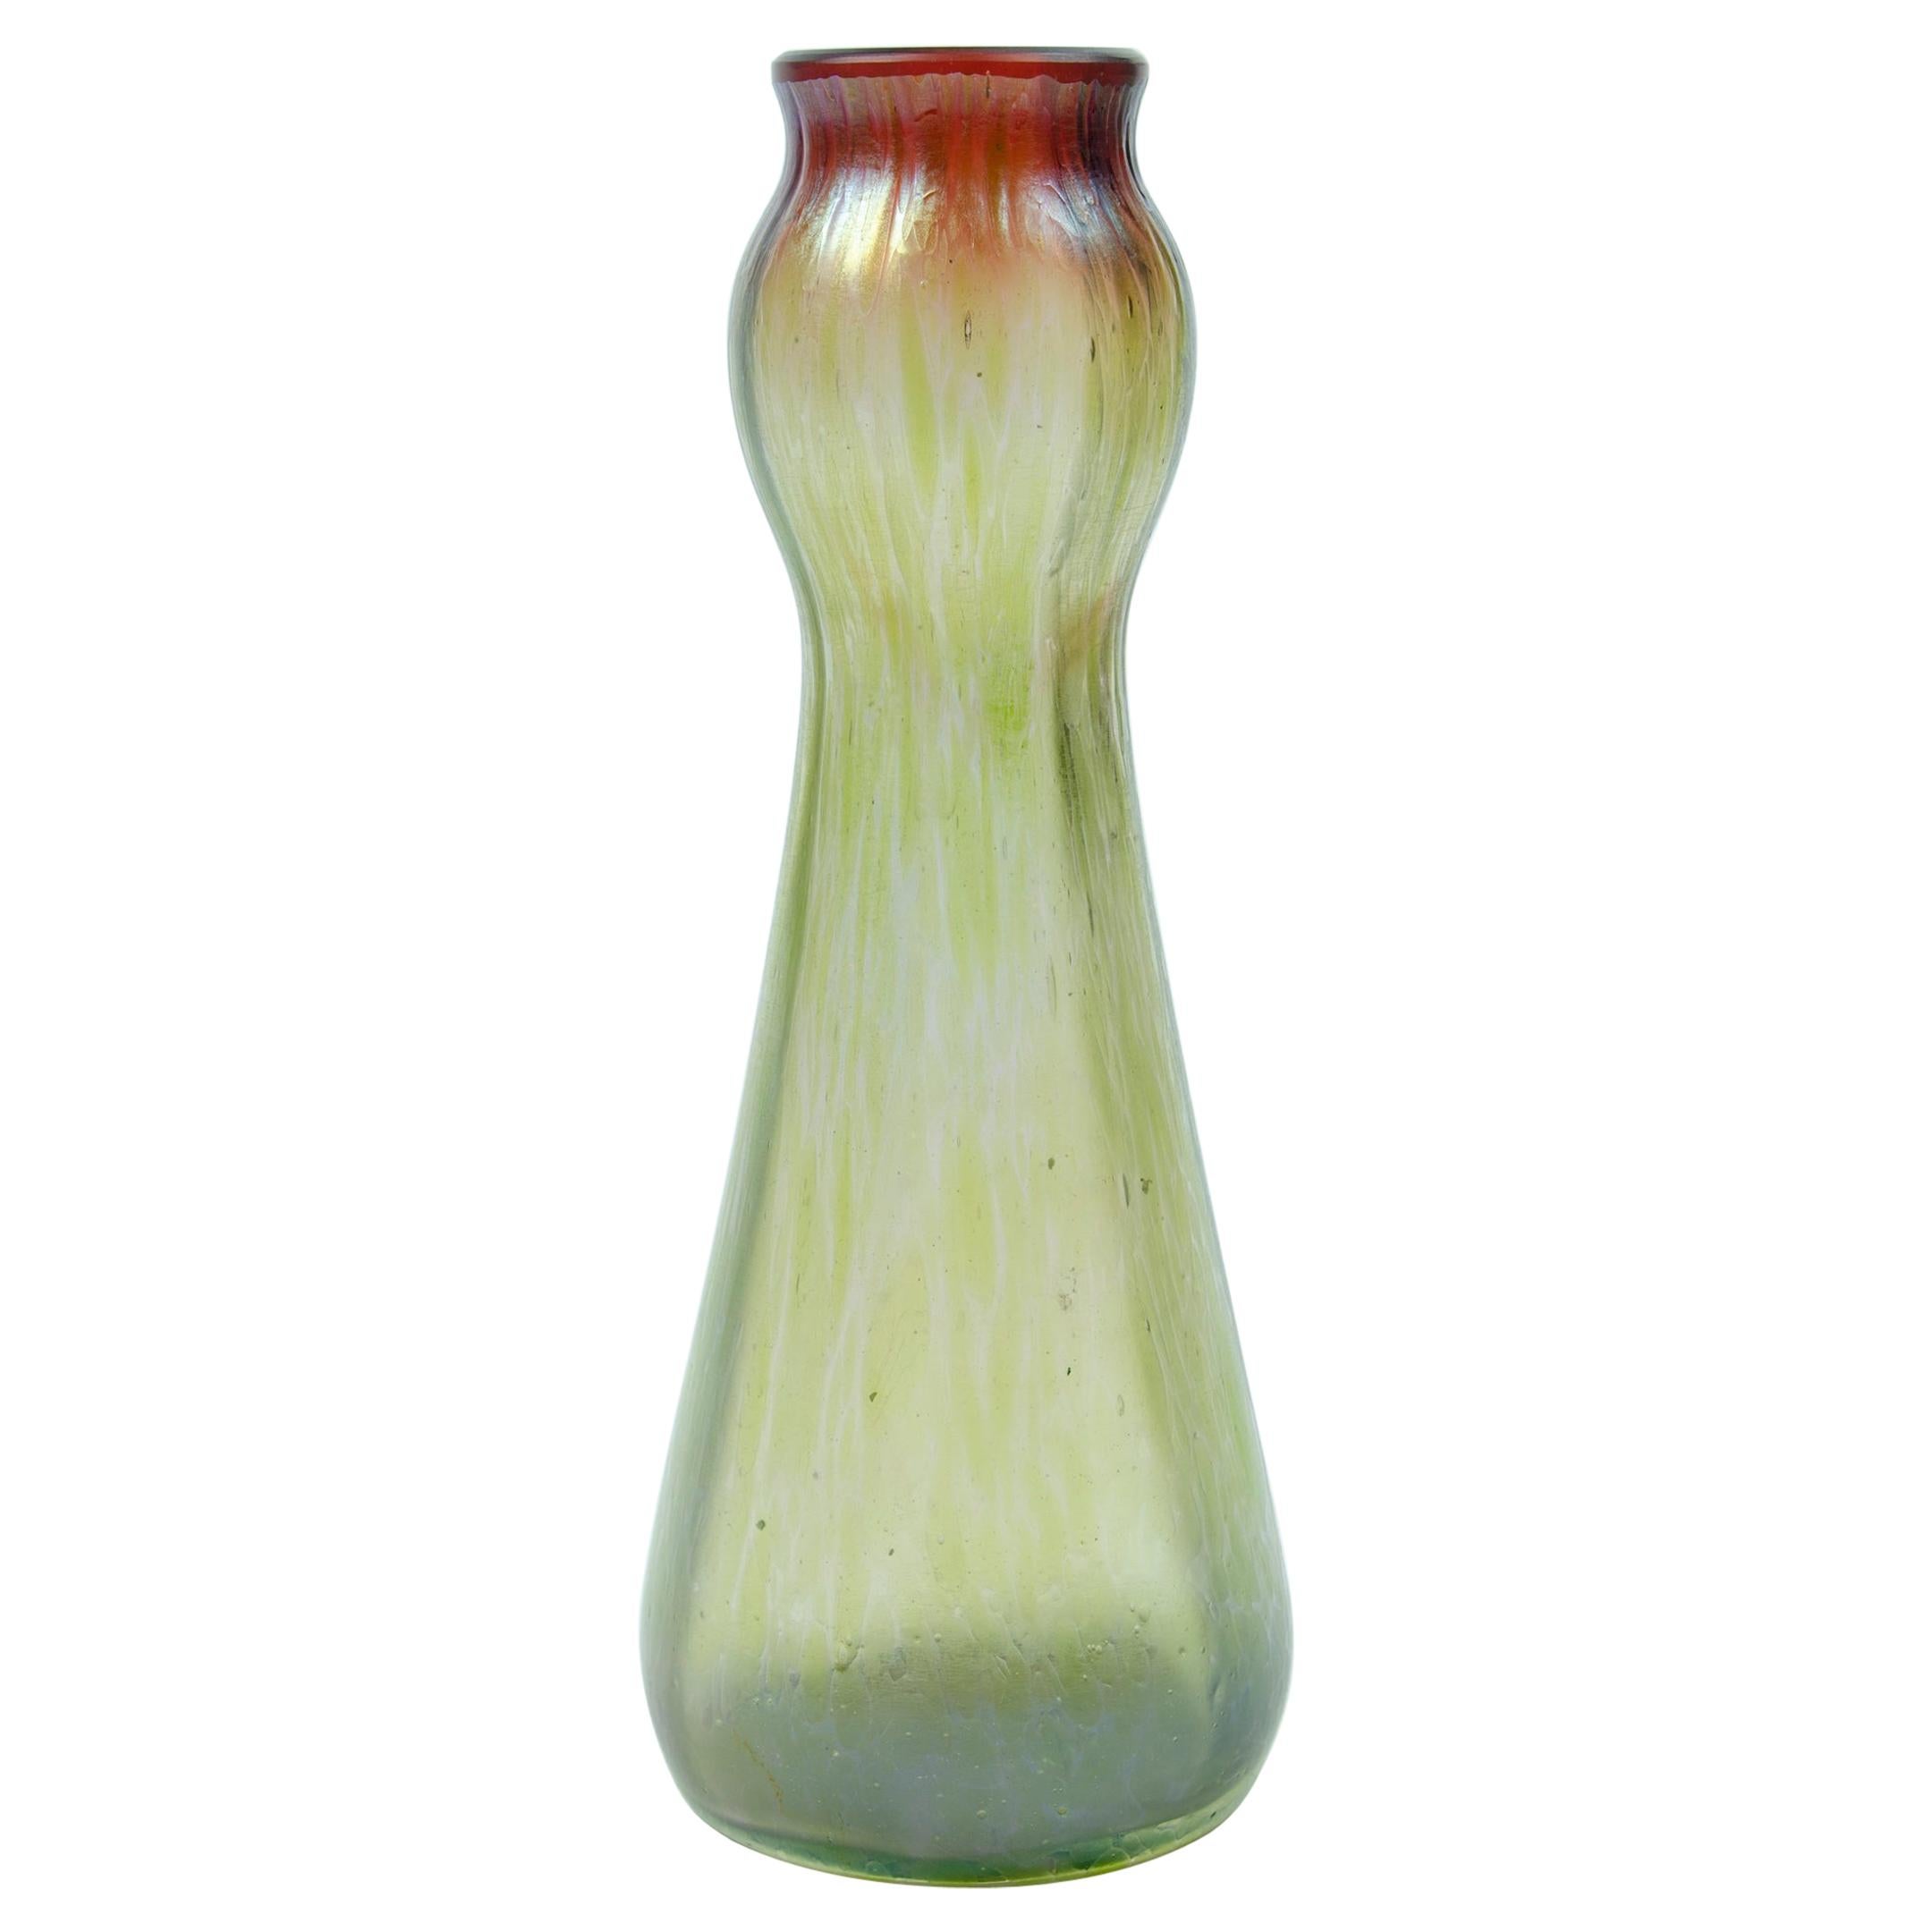 Iridescent Glass Vase Attributed to Loetz